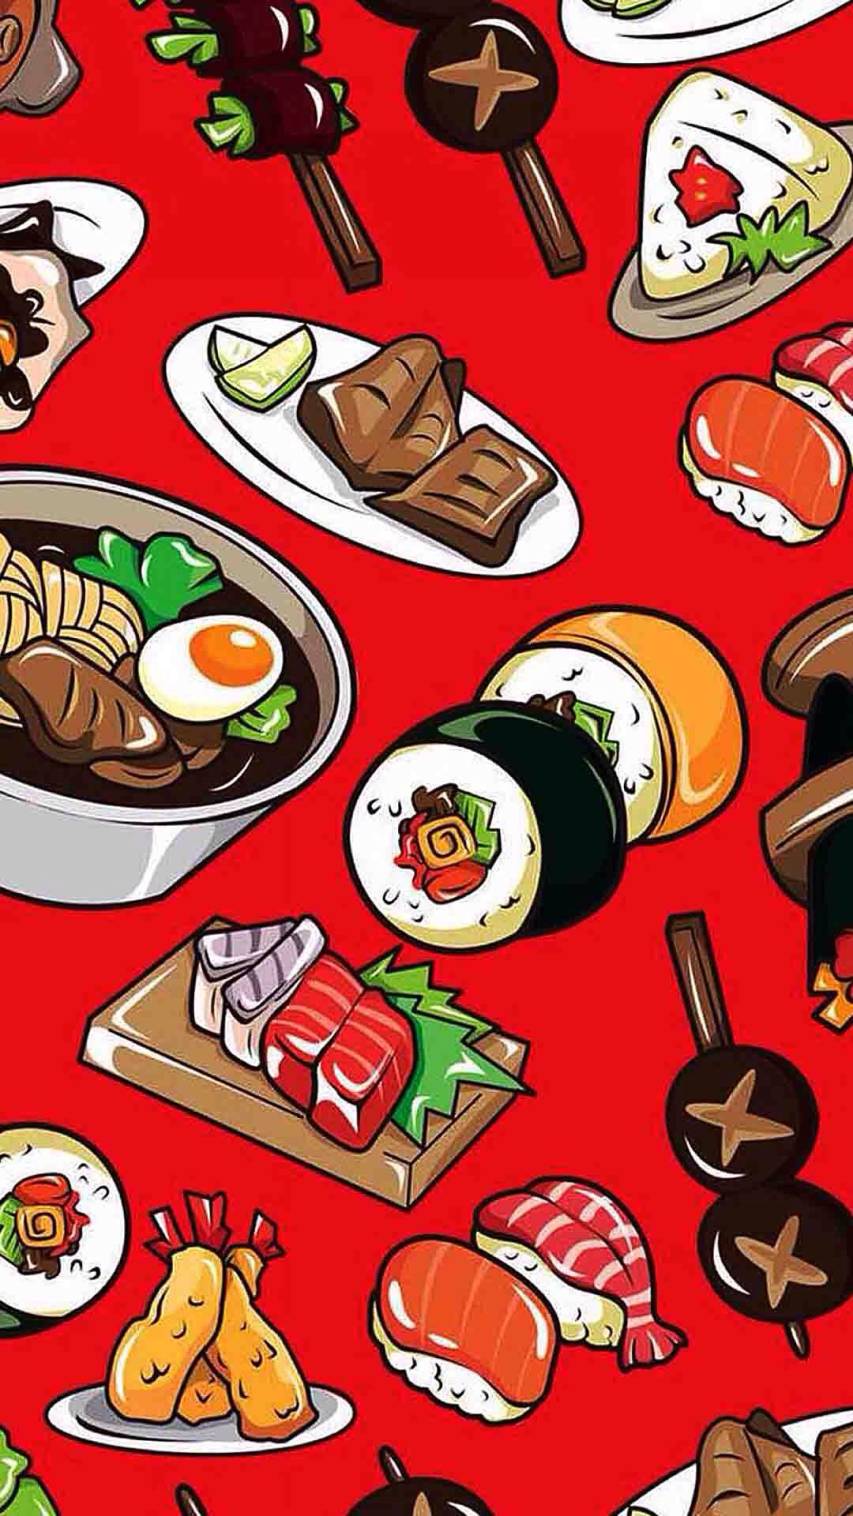 Artist Makes Amazing Studio GhibliStyle Indonesian Food Art